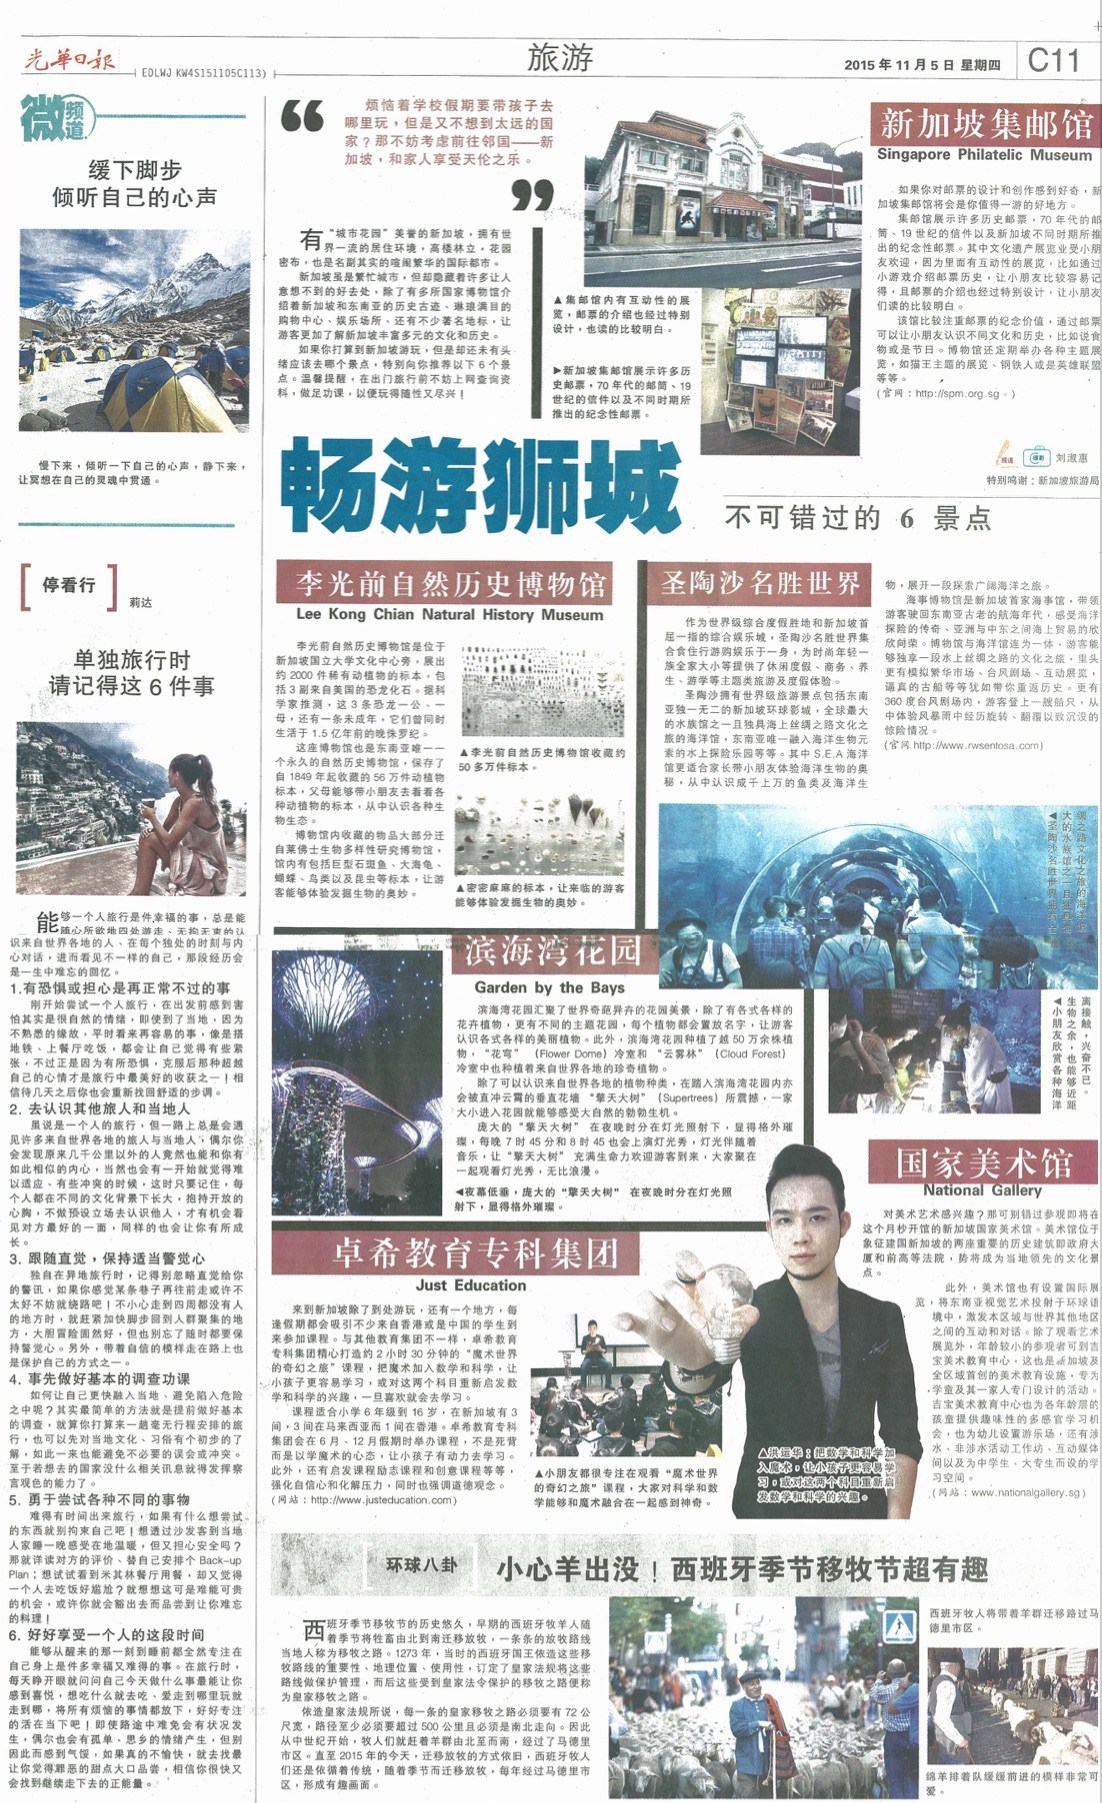 4. Francis Ang - Math Science Magic - Media - Newspaper Feature - STB Singapore Tourism Board - Kwang Wah Yit Poh 光华日报